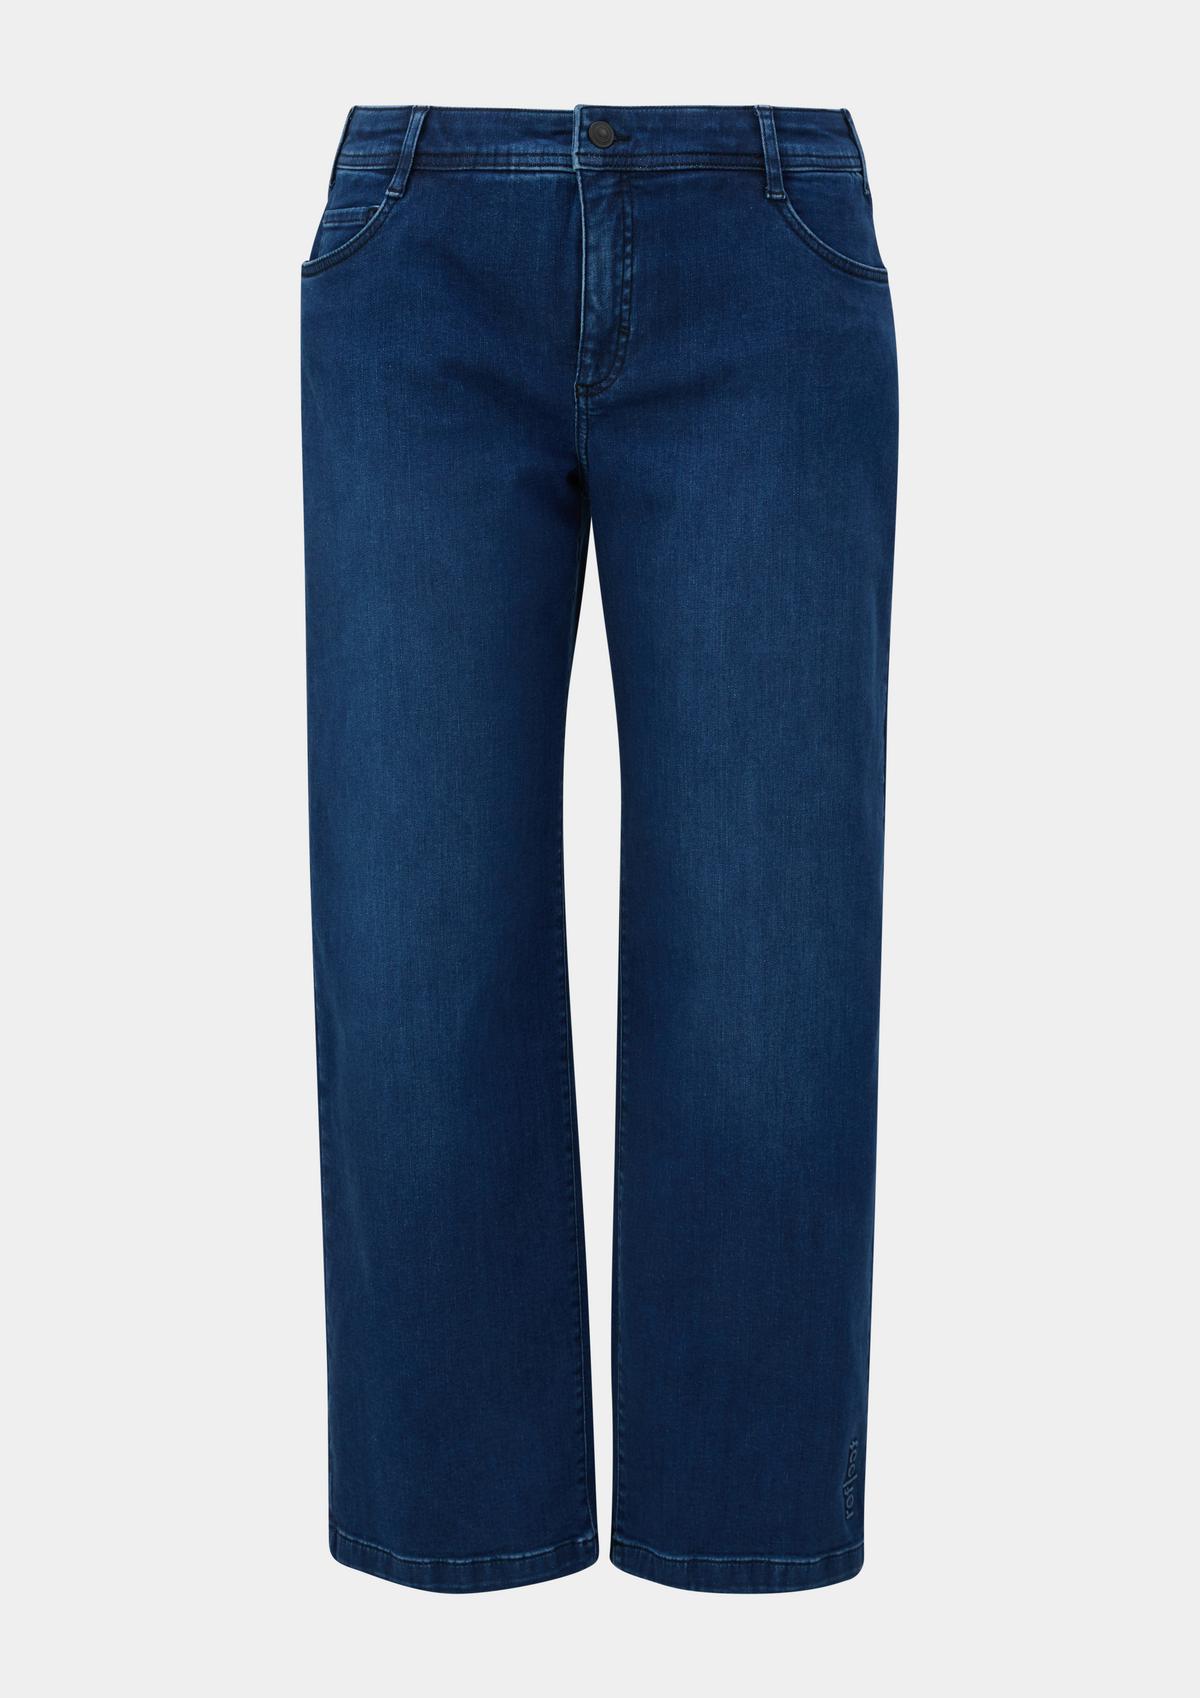 s.Oliver Jeans / regular fit / mid rise / wide leg